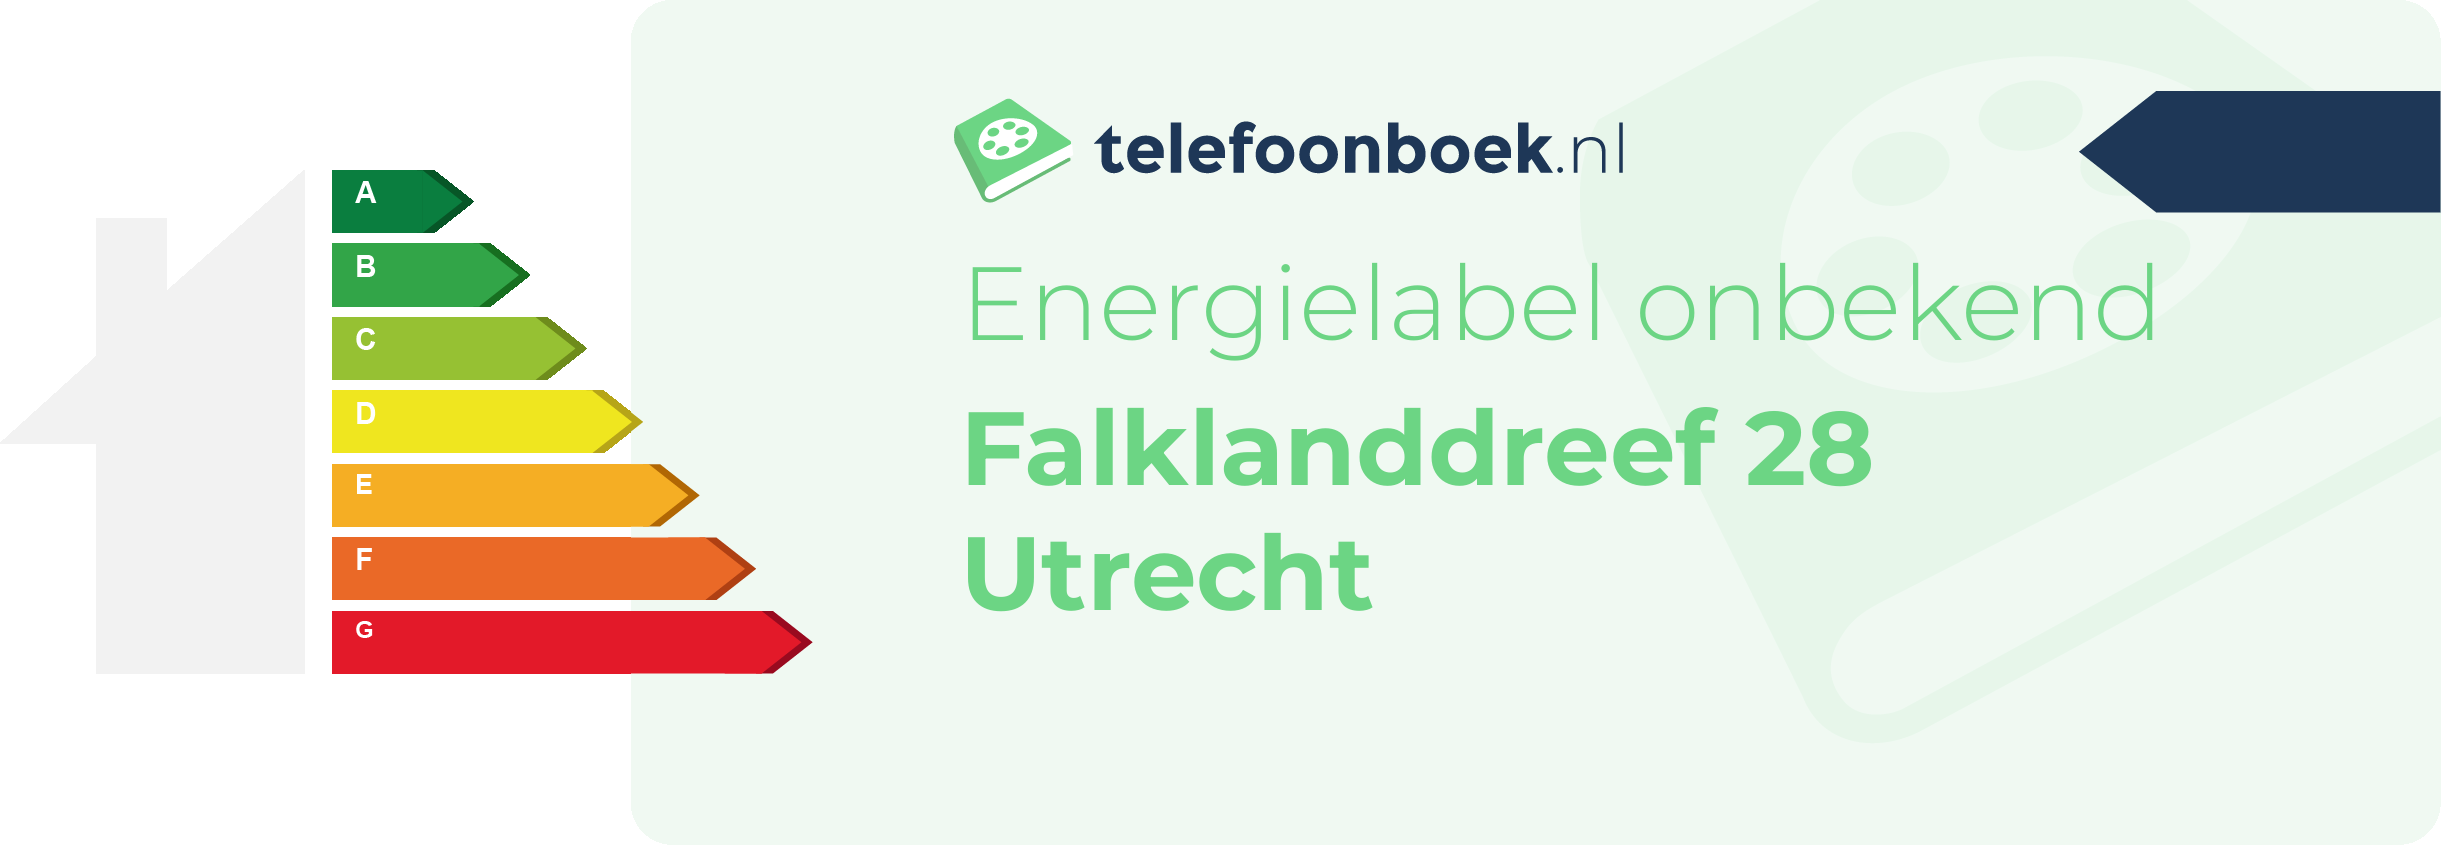 Energielabel Falklanddreef 28 Utrecht